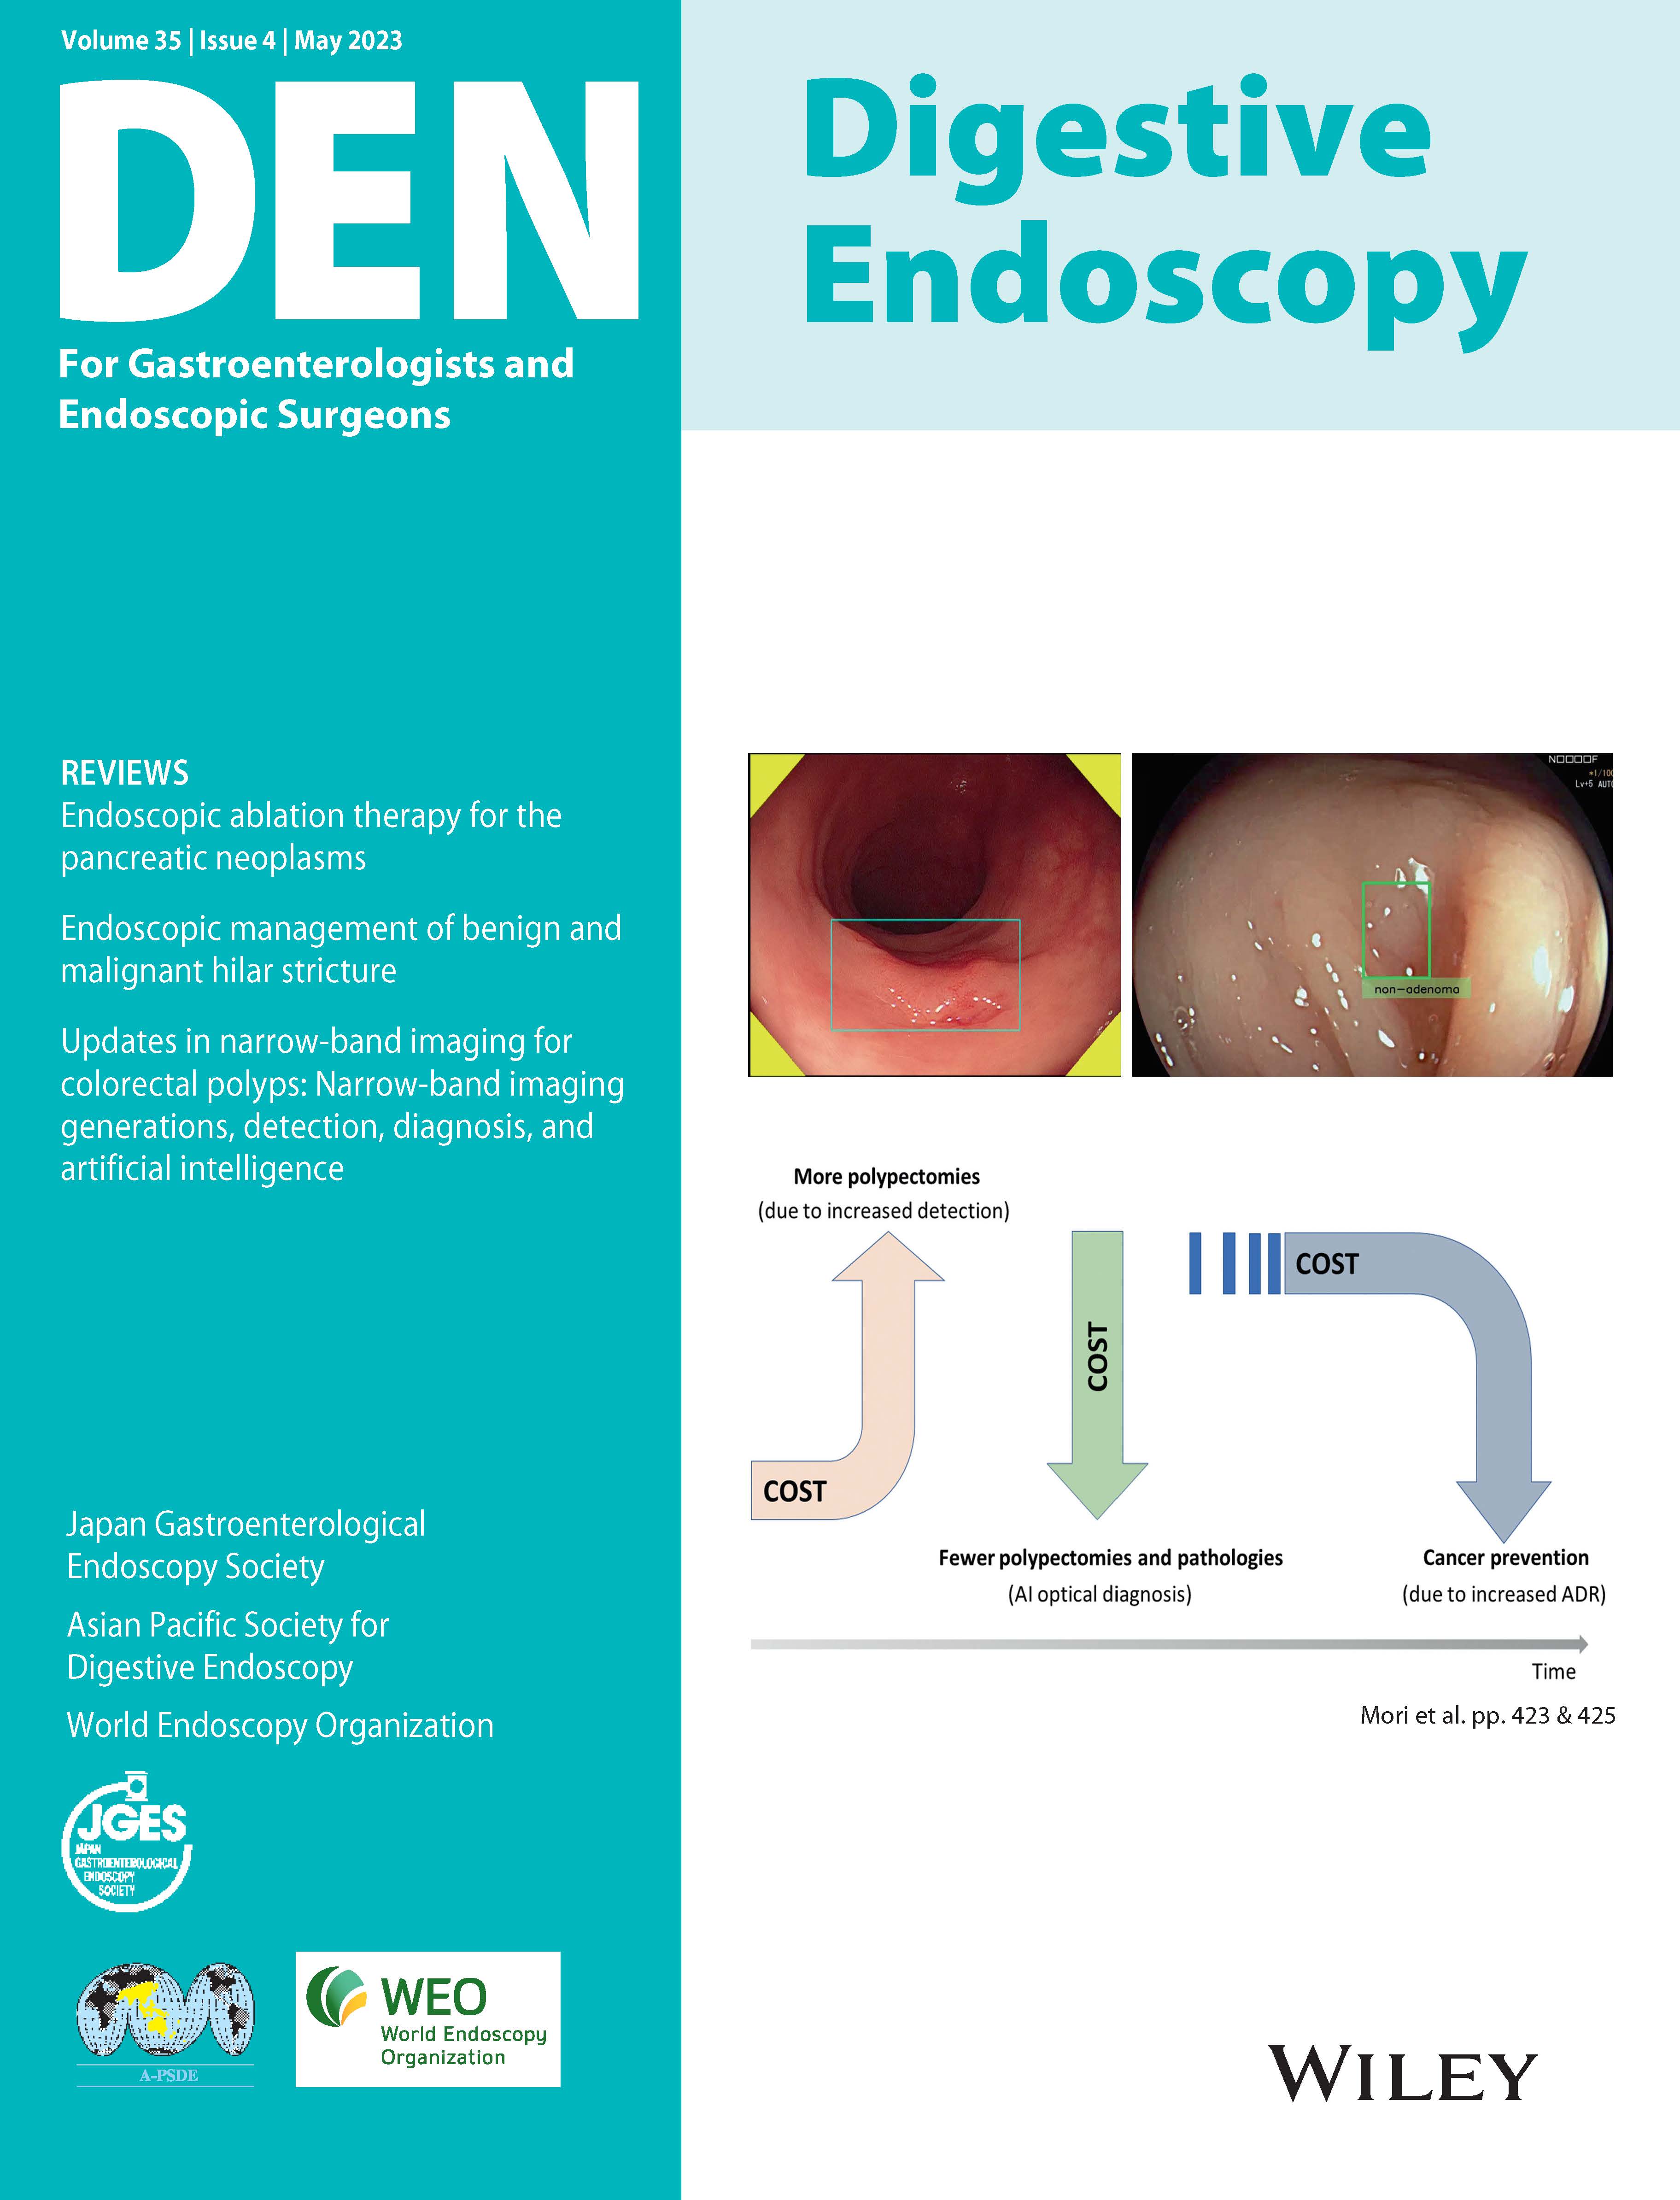 Digestive Endoscopy Vol35-4